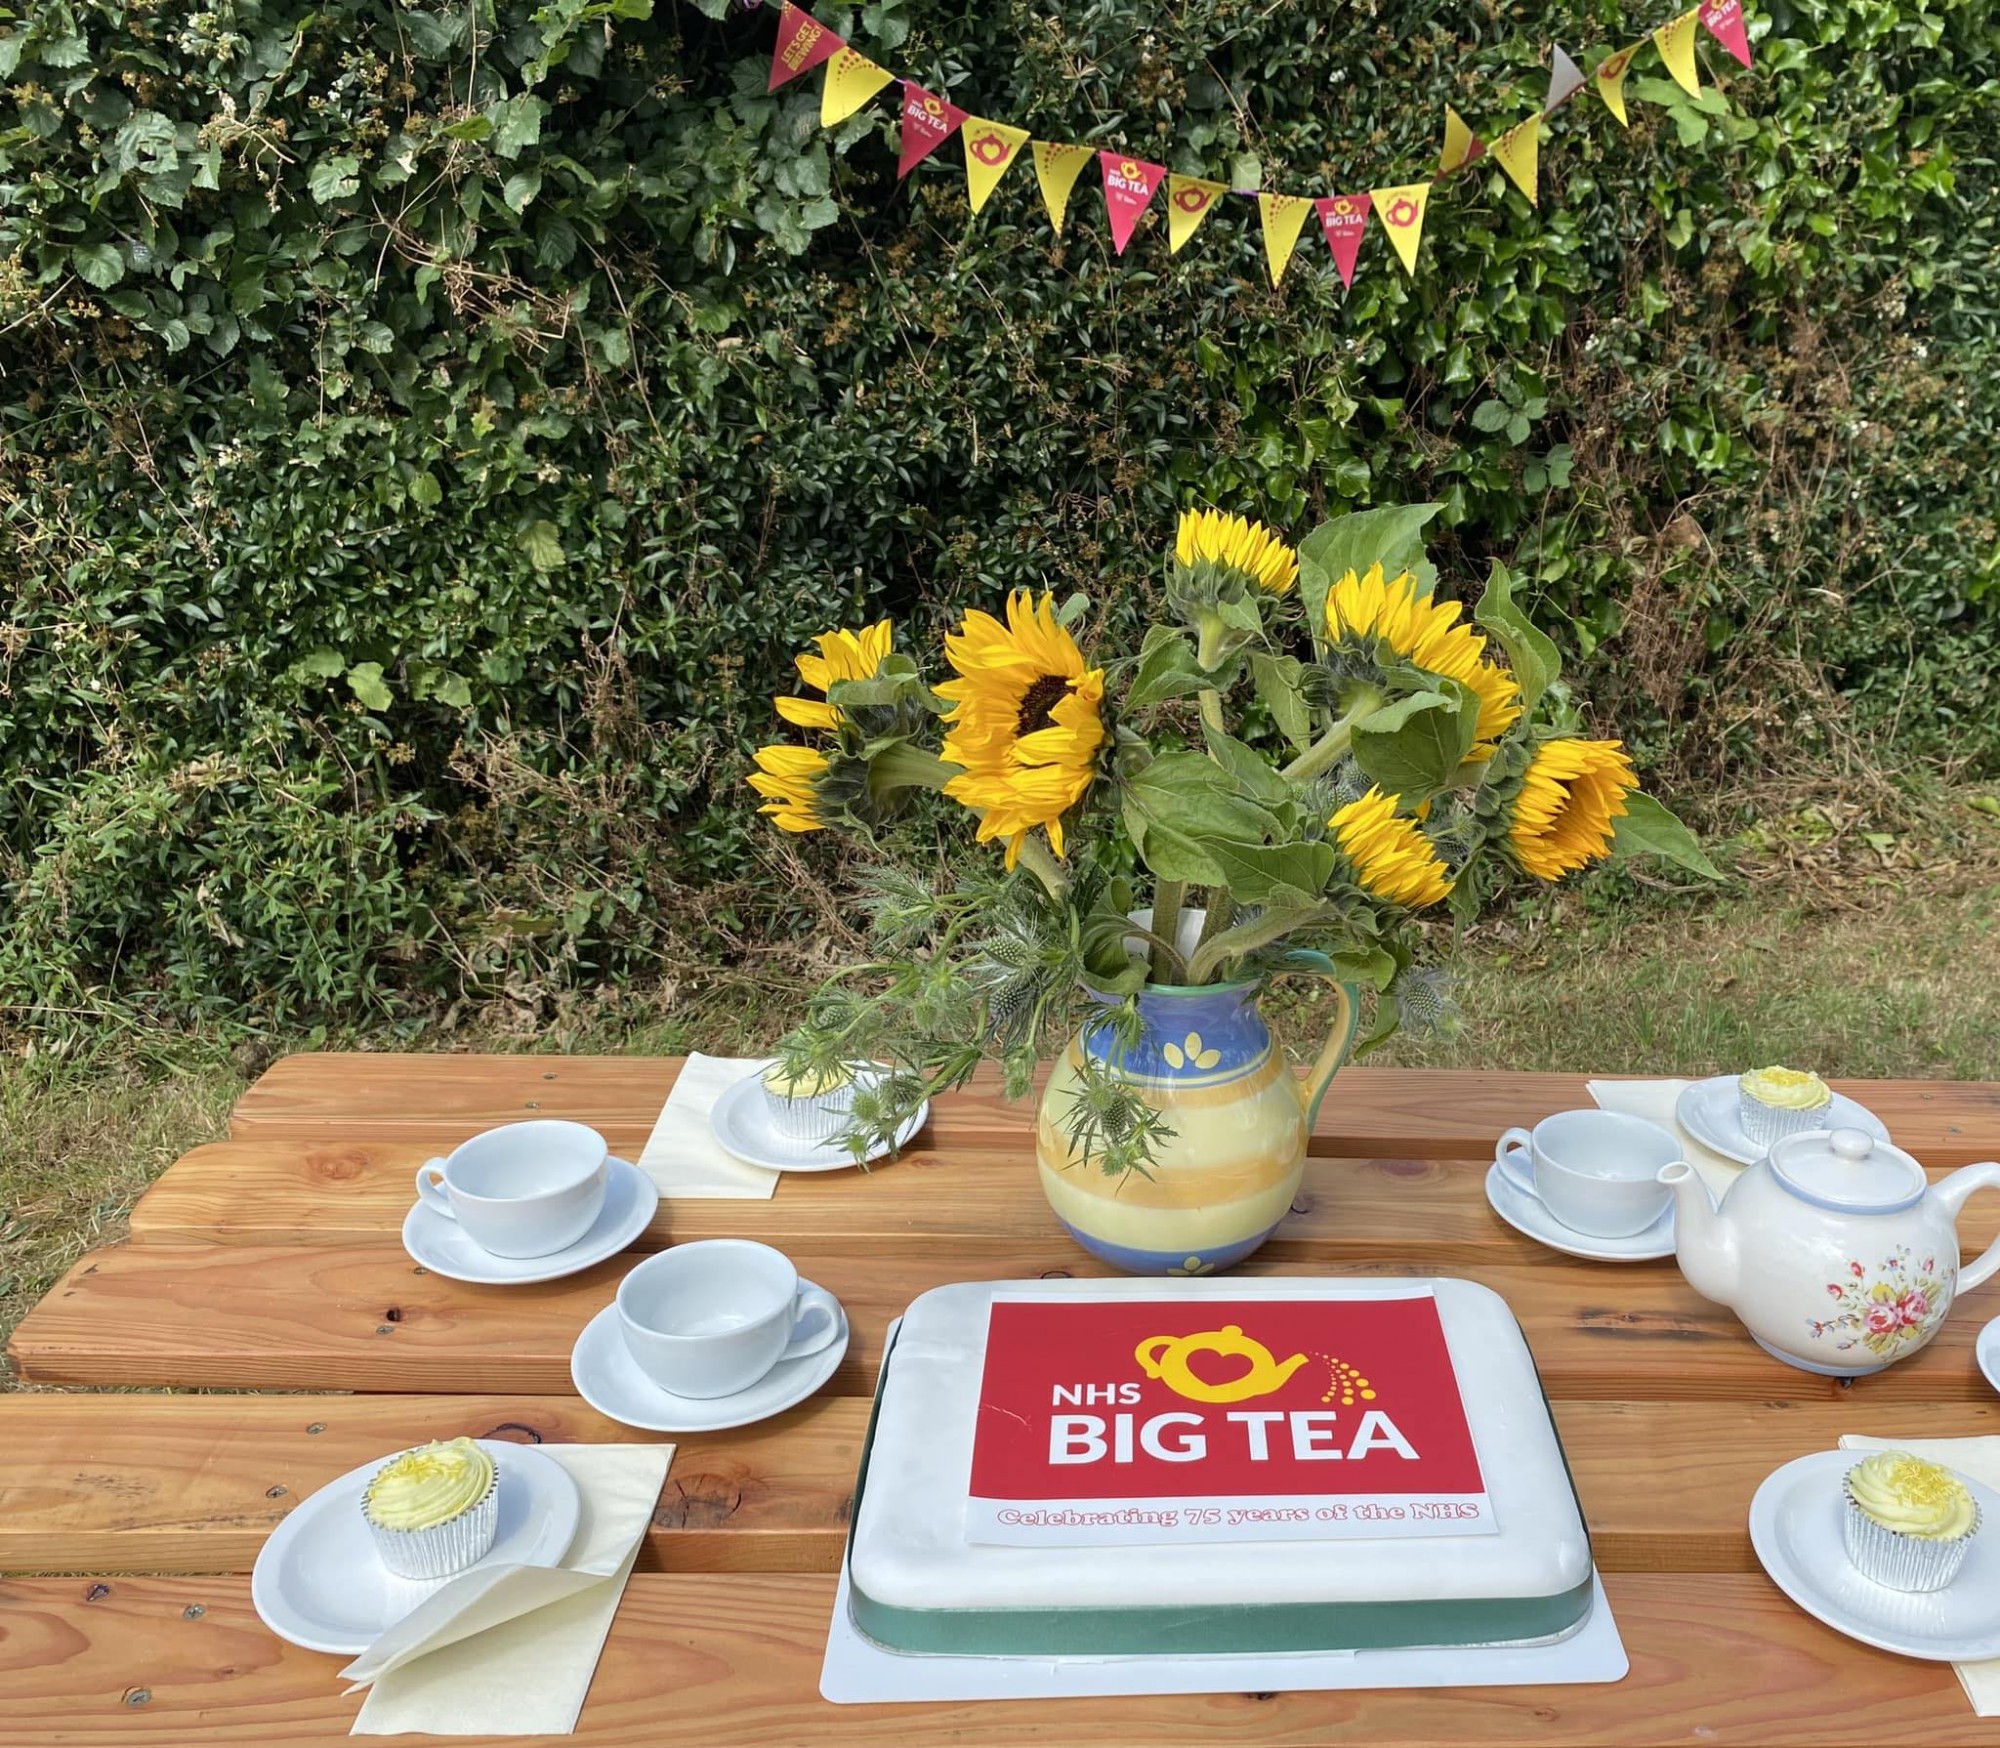 New Leaf Big Tea event brings community together